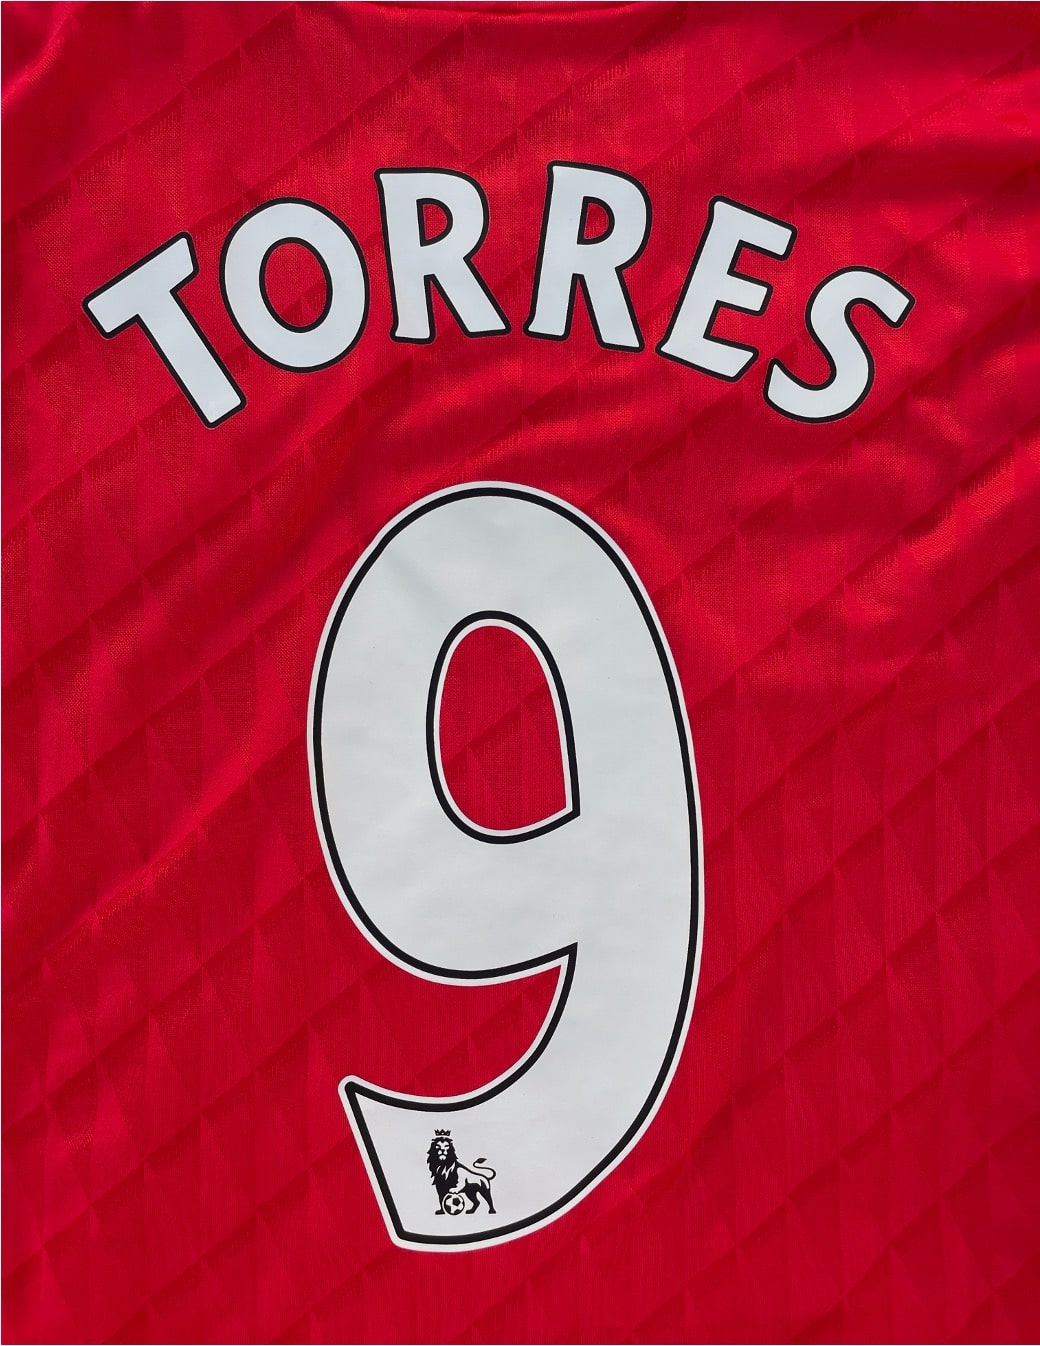 Torres - Liverpool 2011/12 - Home